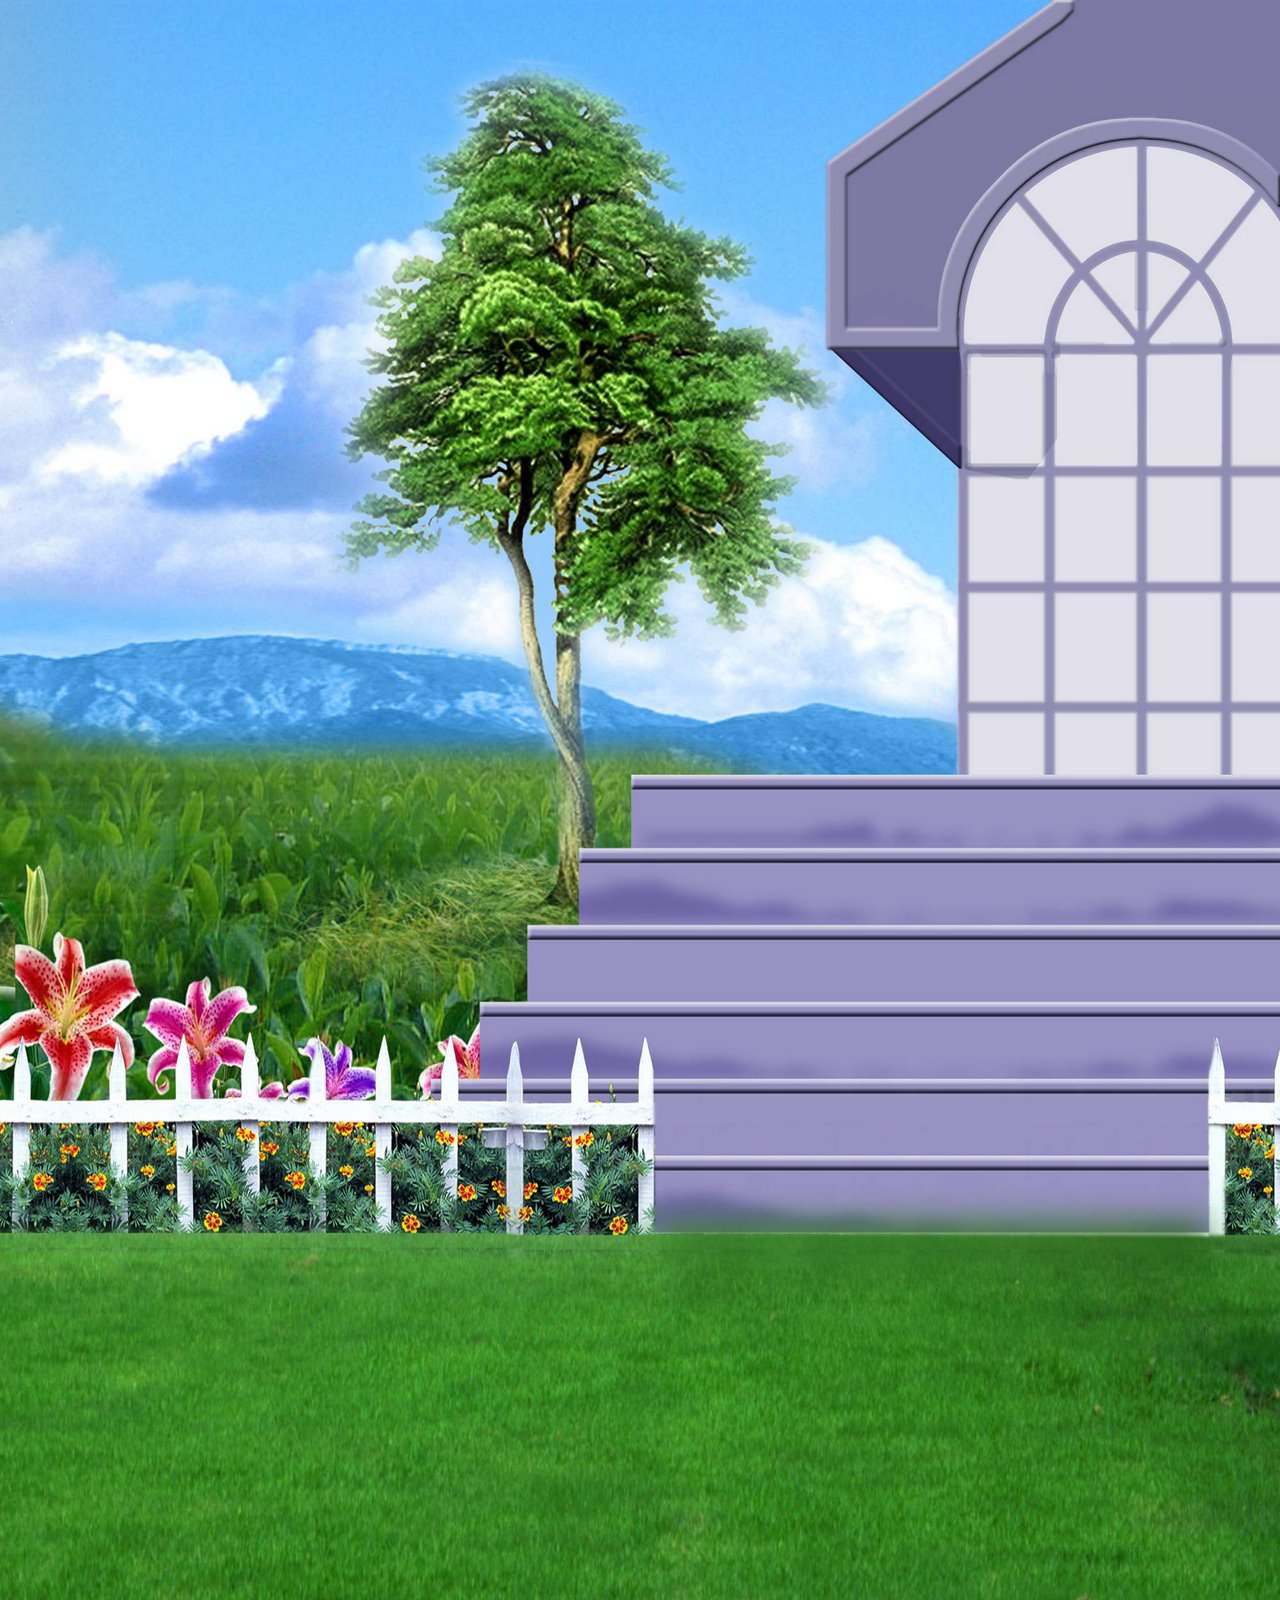 Beautiful garden background  garden background  wall designs hd  studio  background hd  YouTube